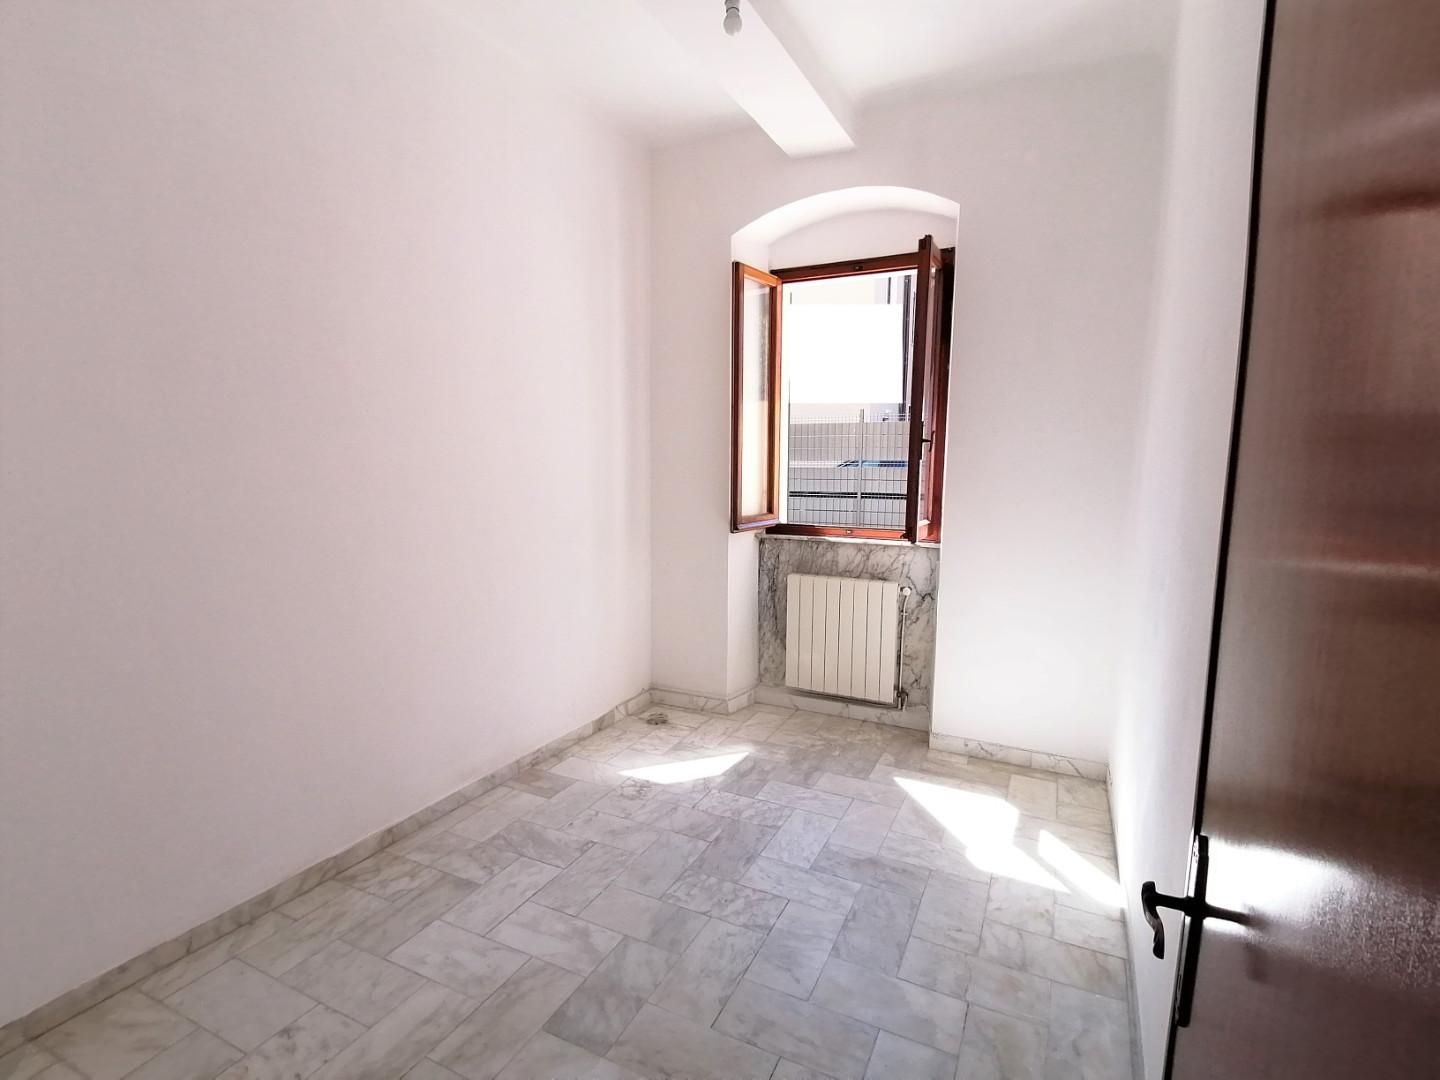 Appartamento in vendita - Fabbrica, Carrara